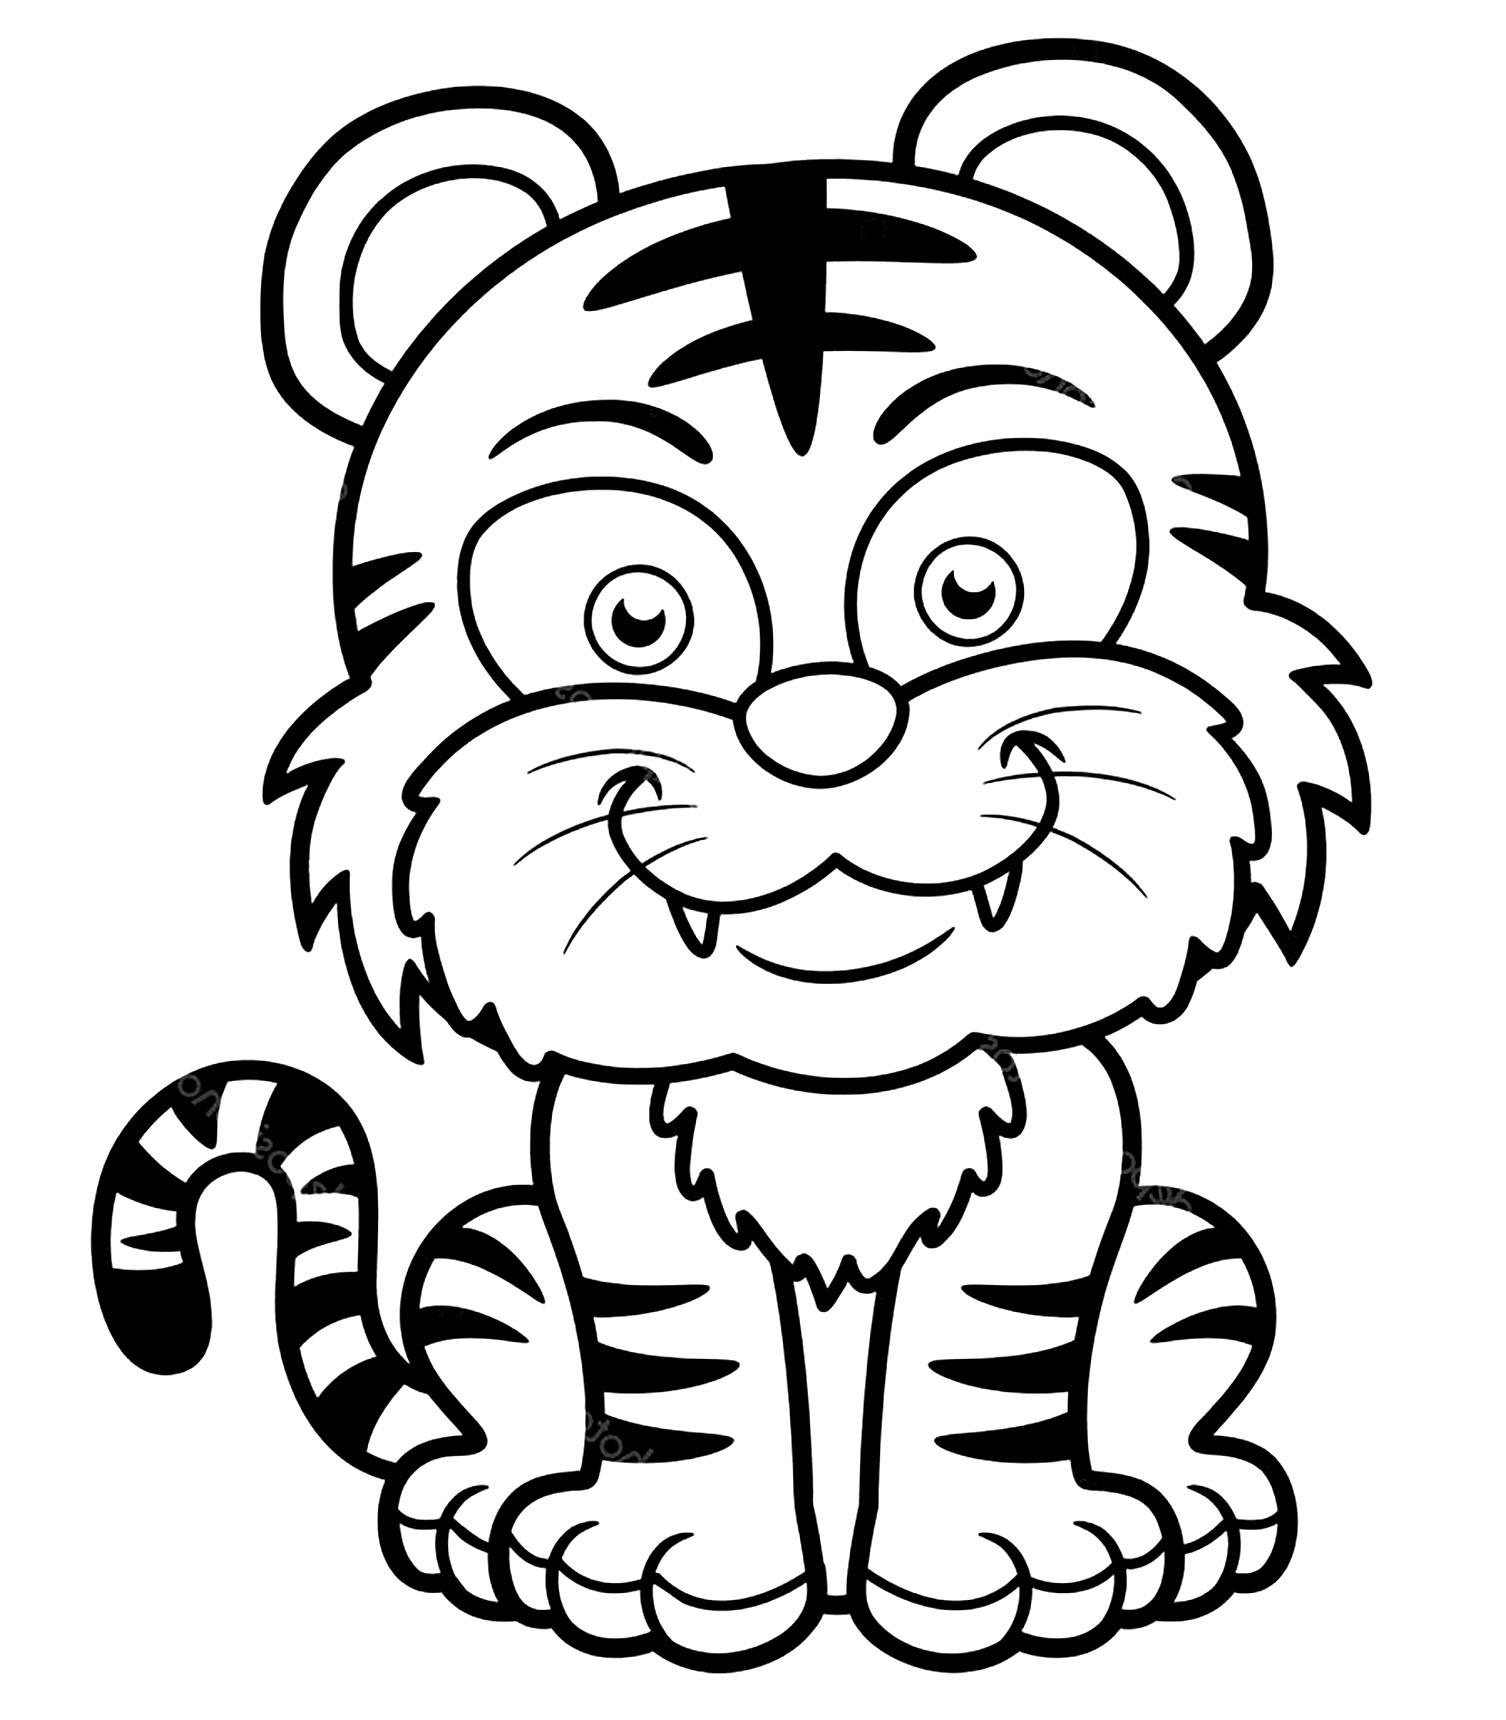 Actualizar Imagen Dibujos De Tigres Animados Faciles